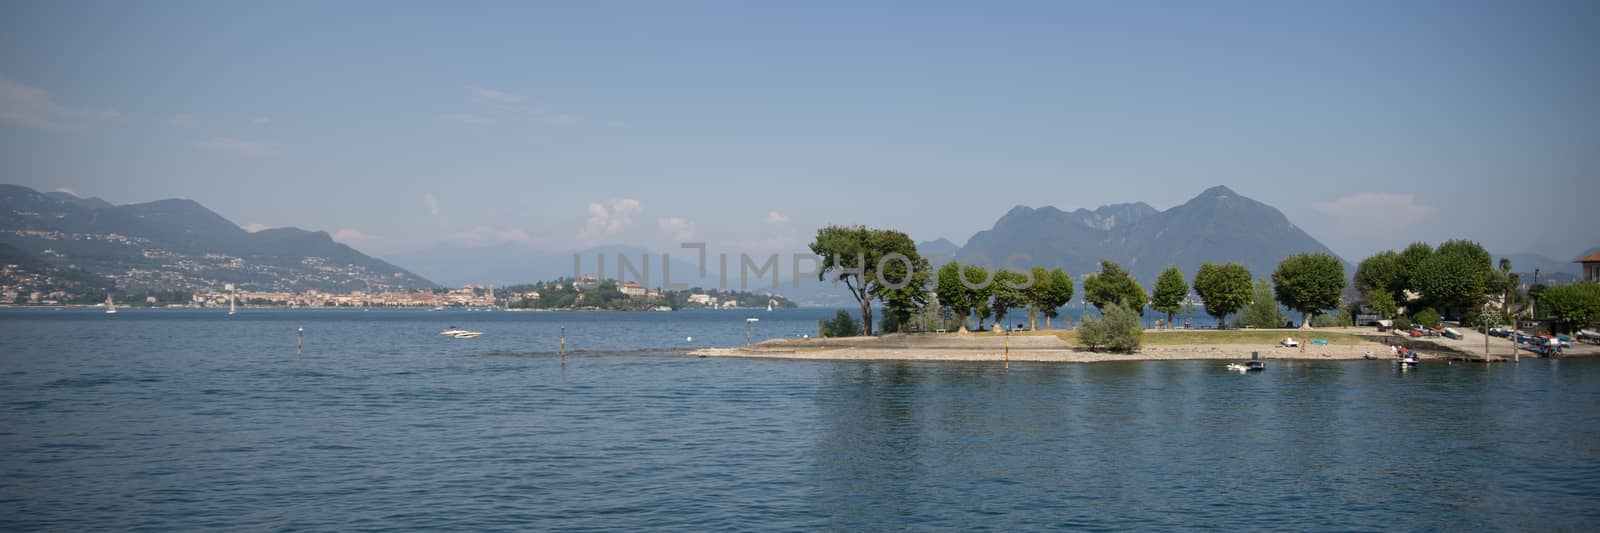 lago maggiore by javax